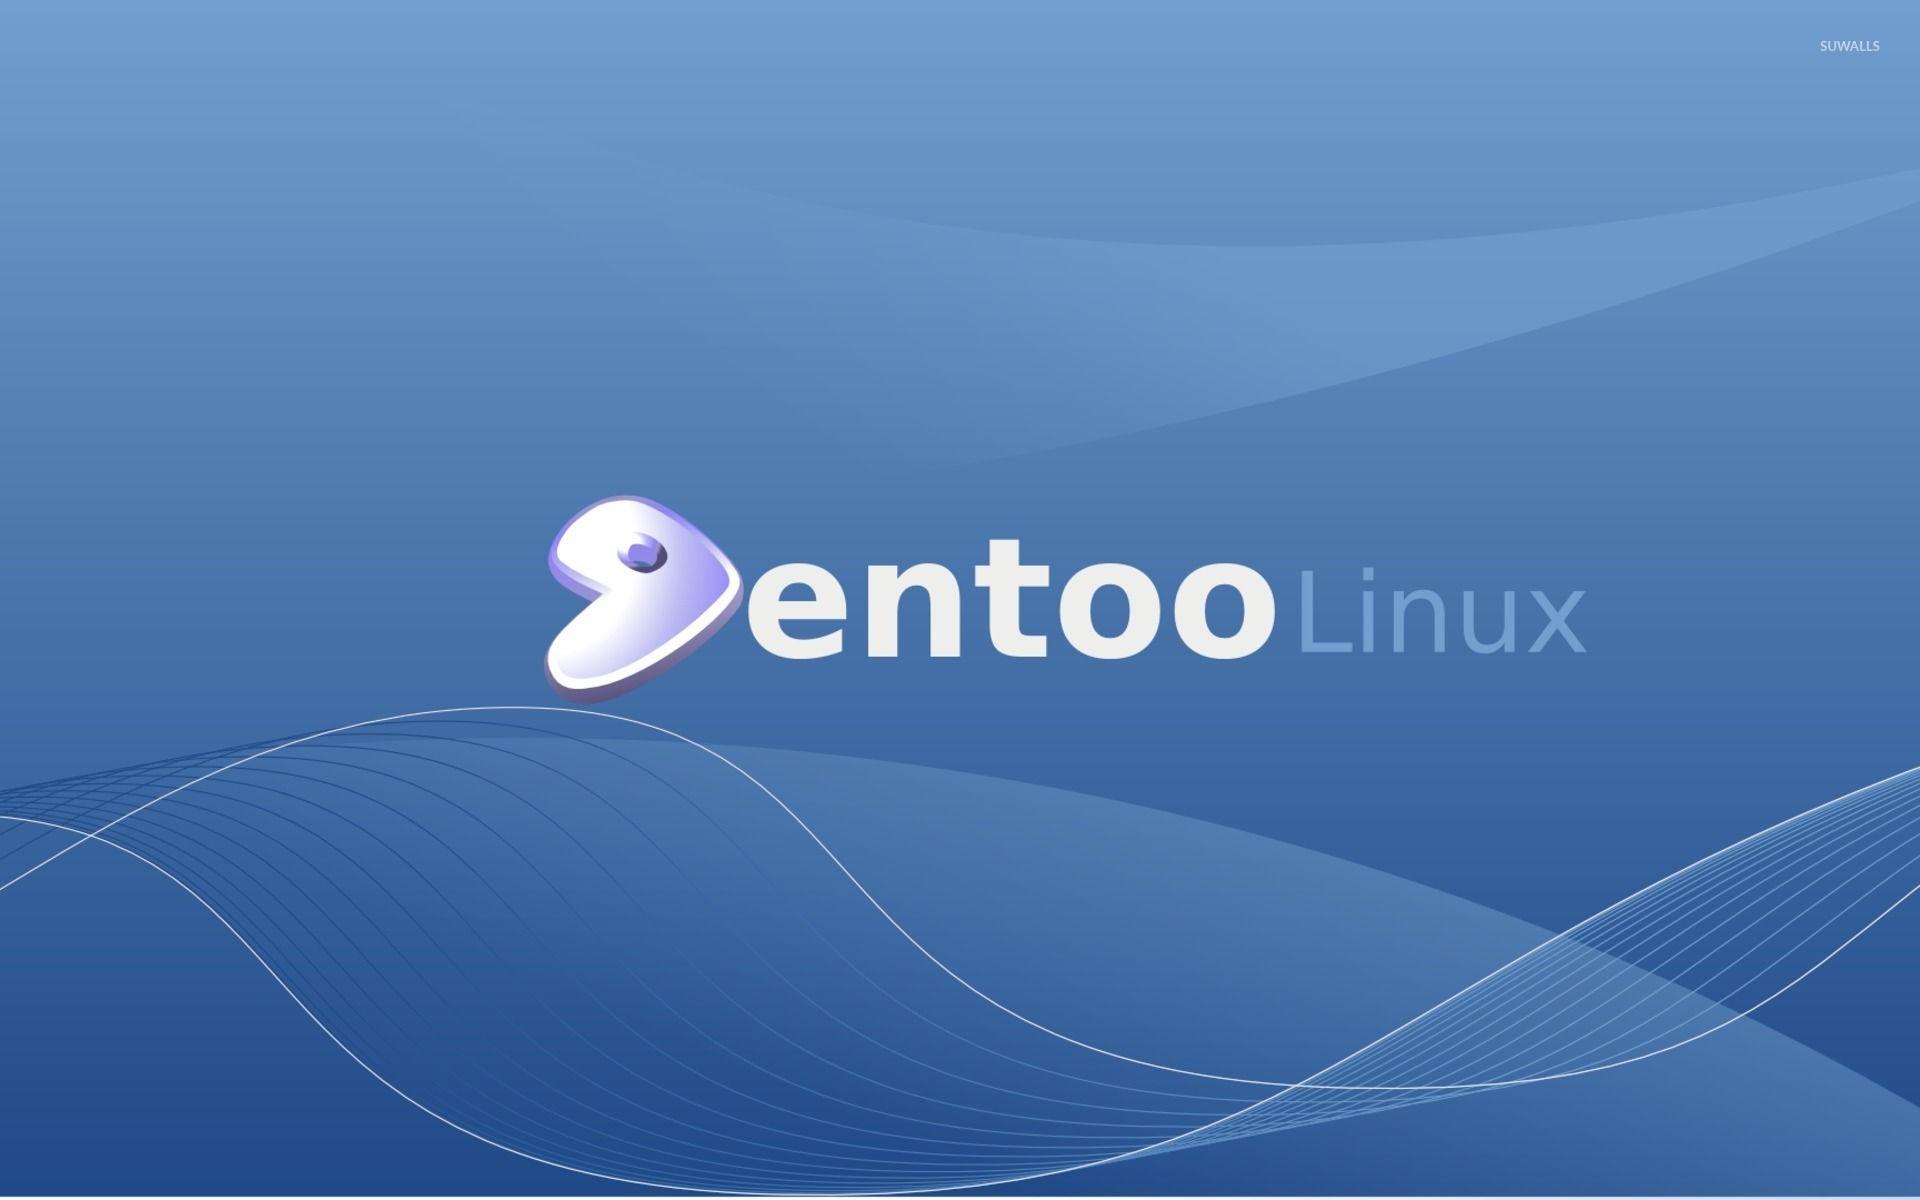 Gentoo Linux wallpaper wallpaper - All